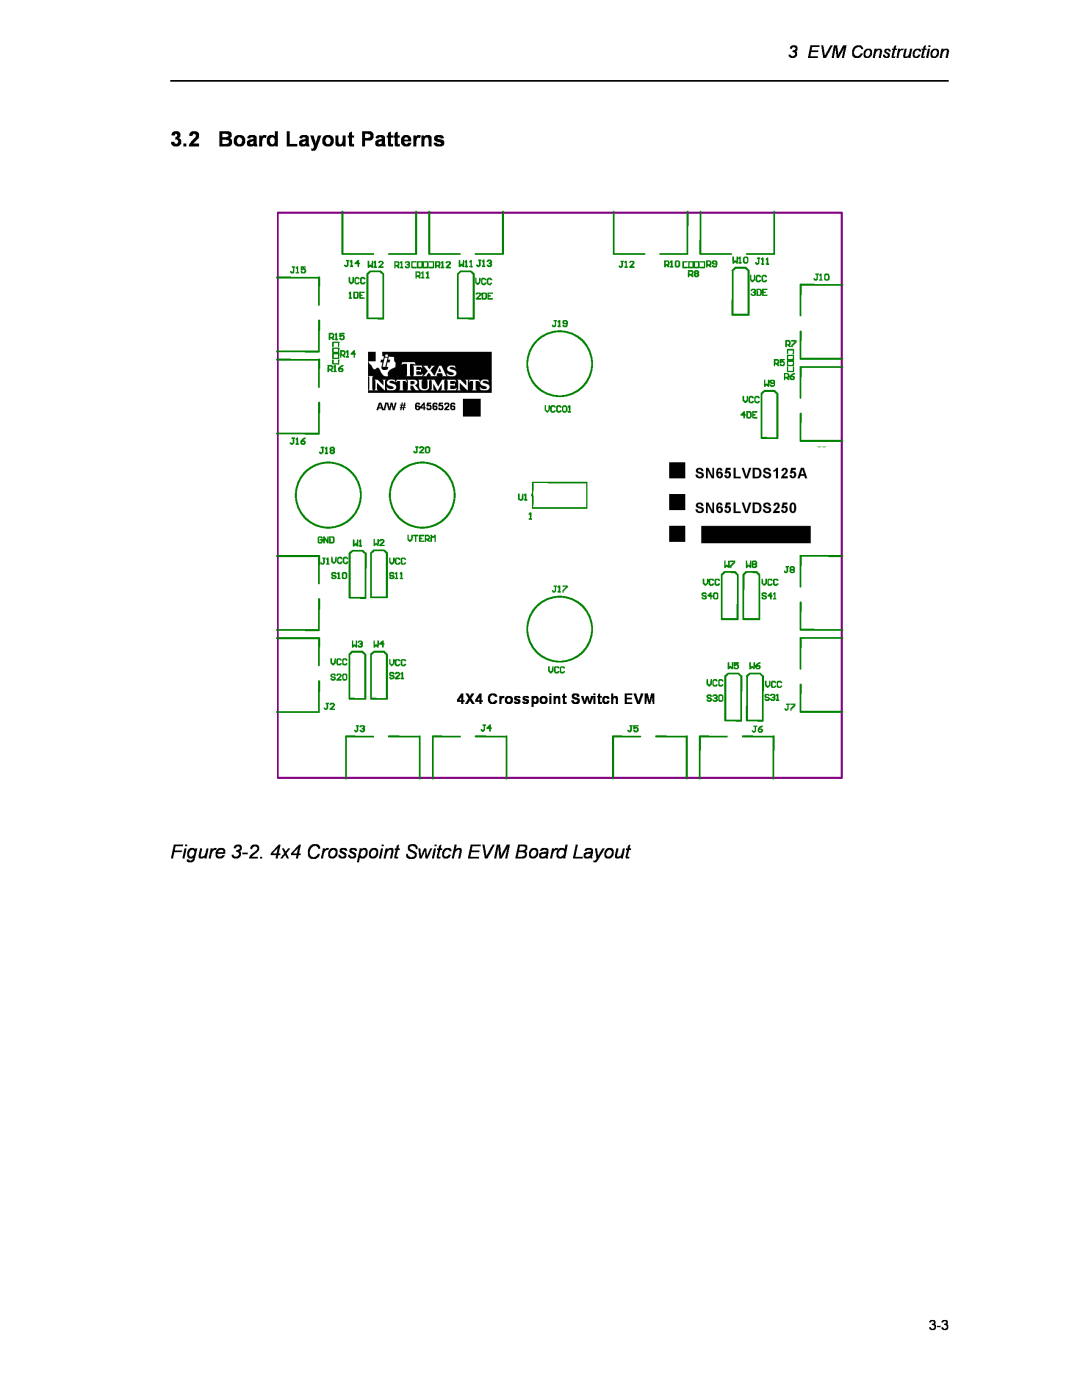 Texas Instruments HPL-D SLLU064A Board Layout Patterns, 2. 4x4 Crosspoint Switch EVM Board Layout, EVM Construction, A/W # 